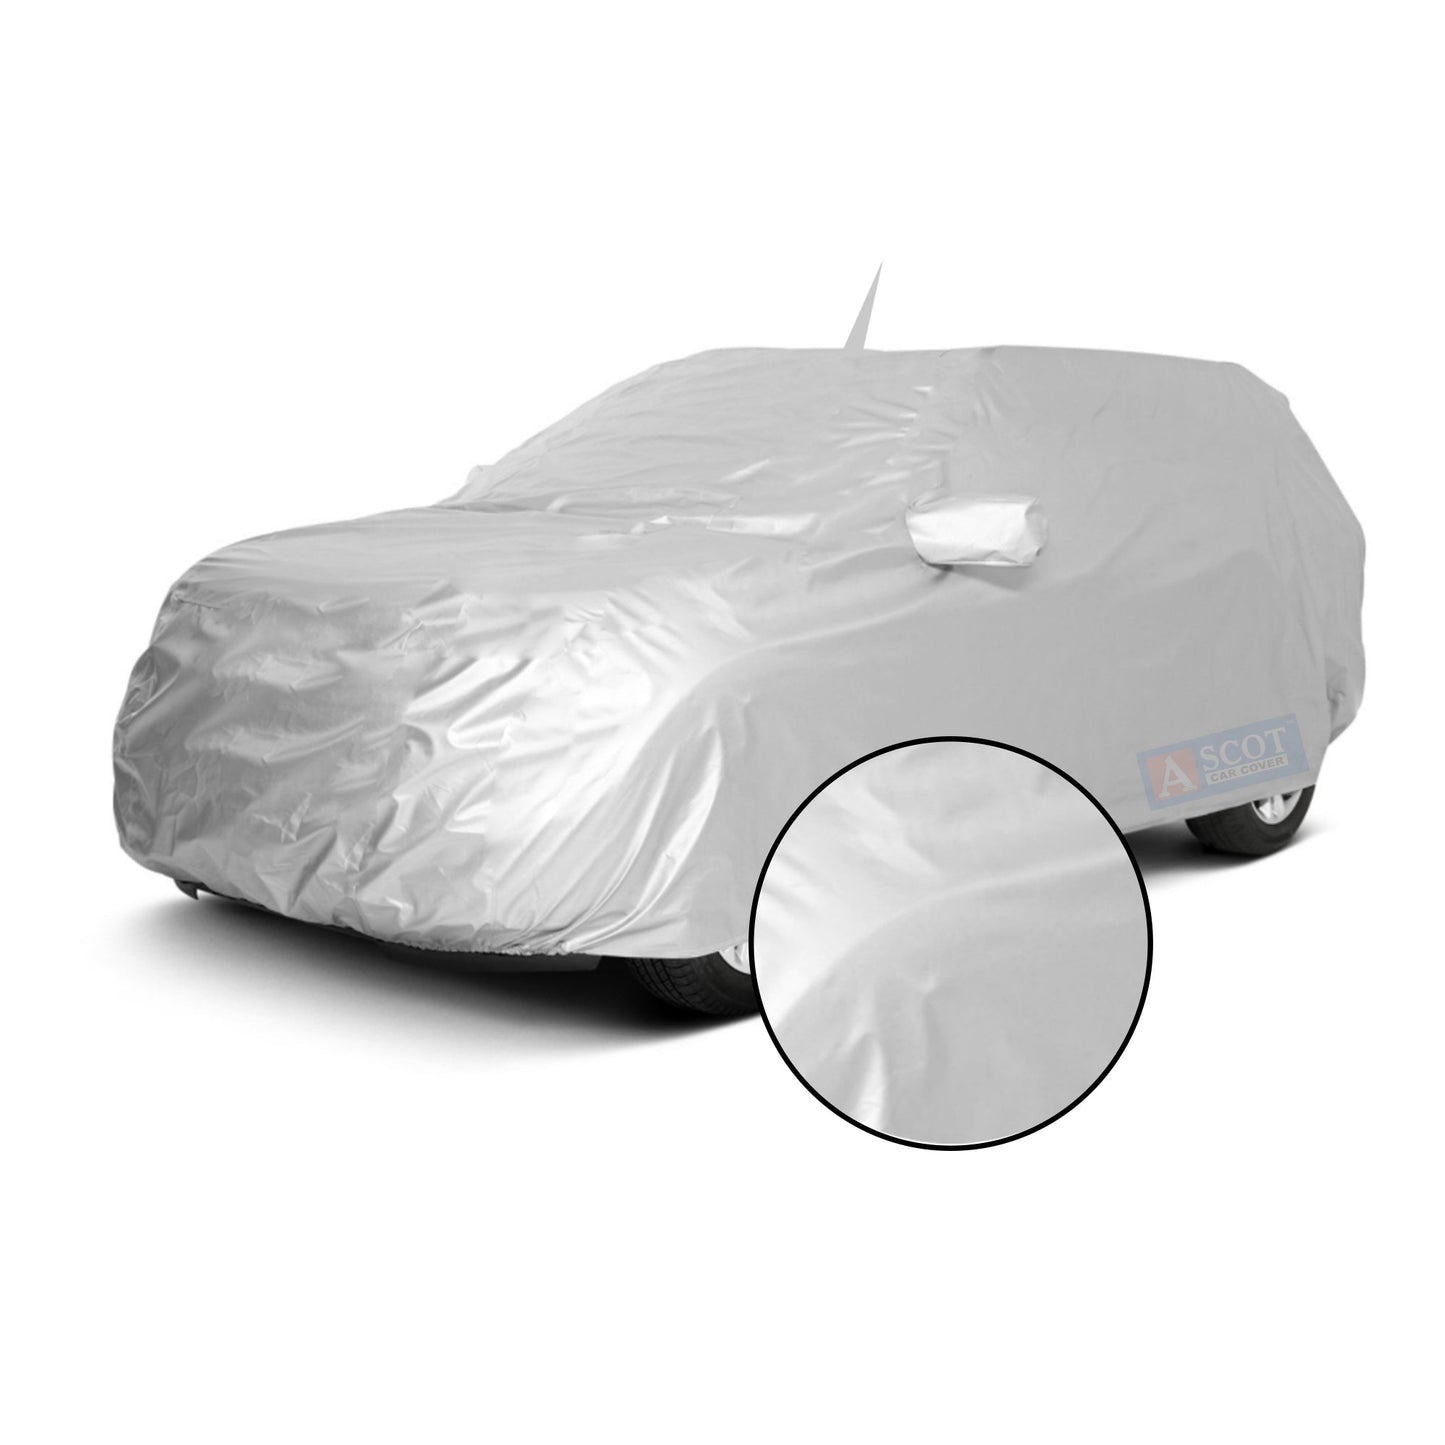 Ascot Audi Q5 2017-2023 Model Car Body Cover Dust Proof, Trippel Stitched